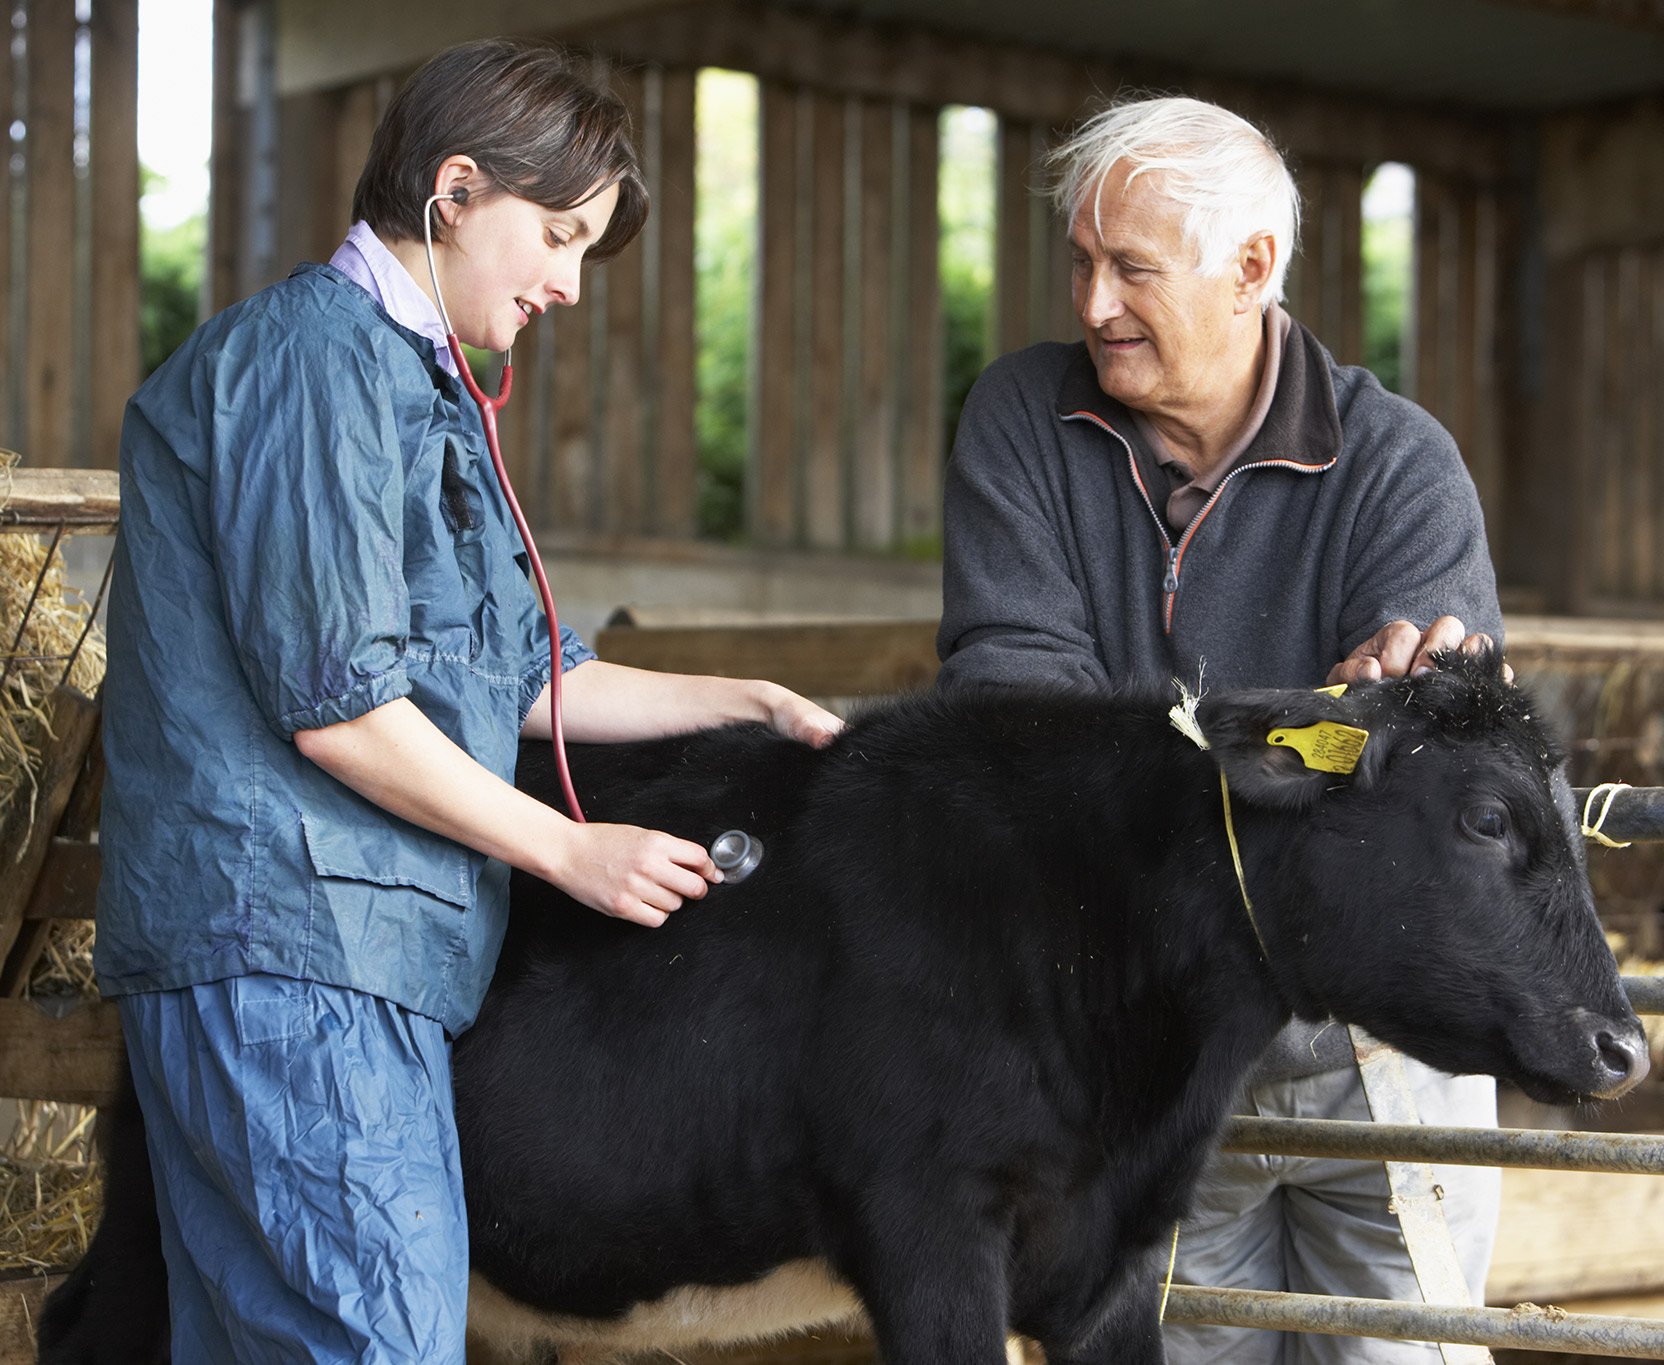 A veterinarian examines a calf with a farmer.